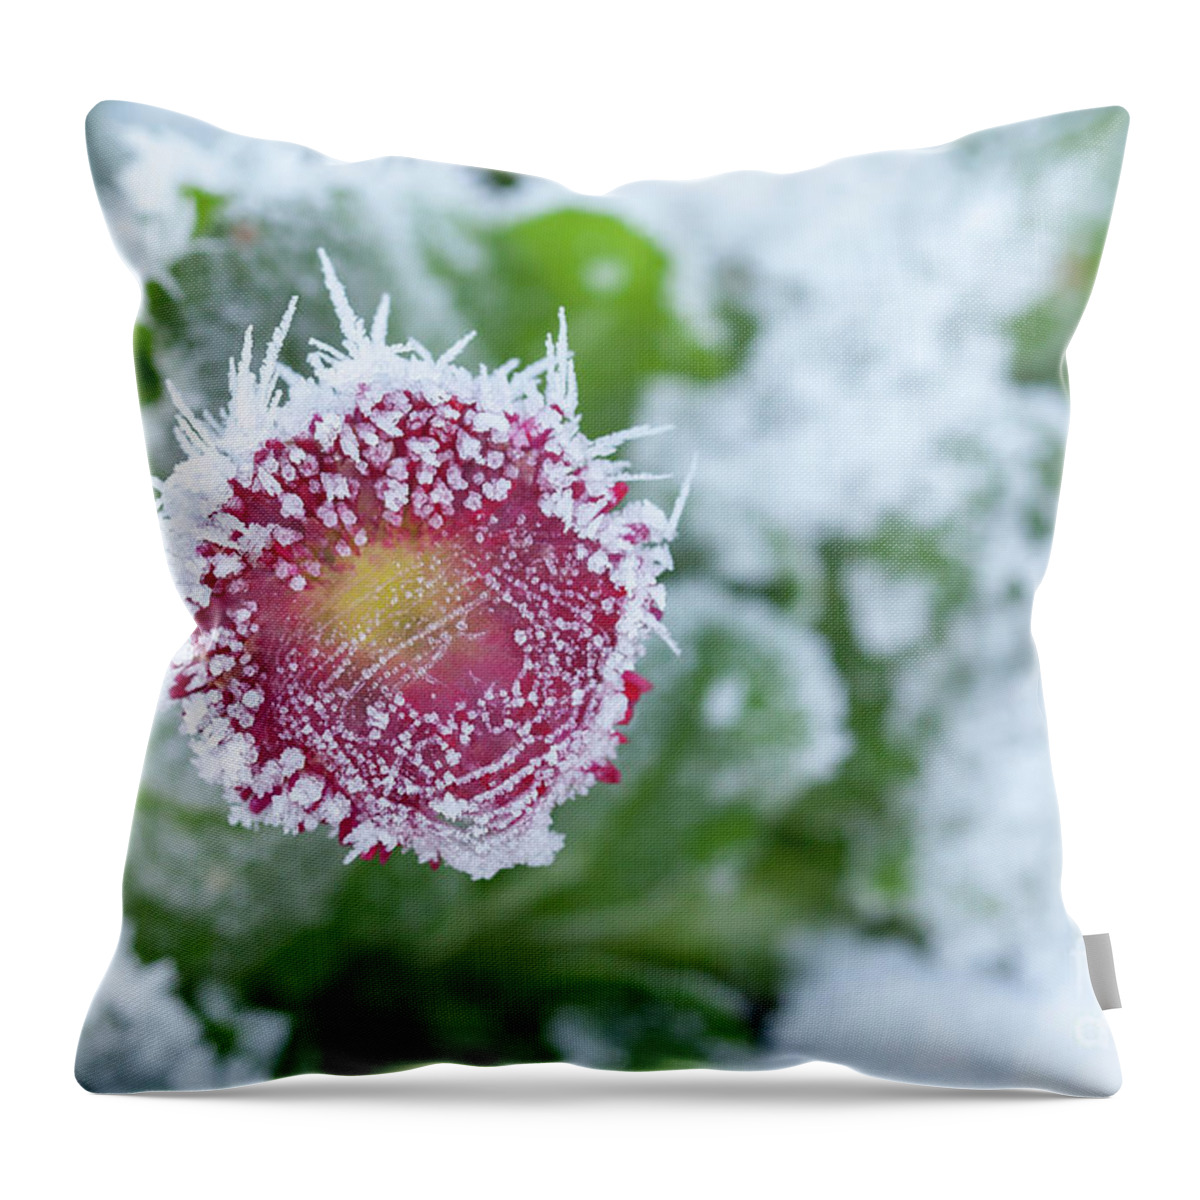 Frozen Throw Pillow featuring the photograph Daisy frozen in winter garden by Simon Bratt